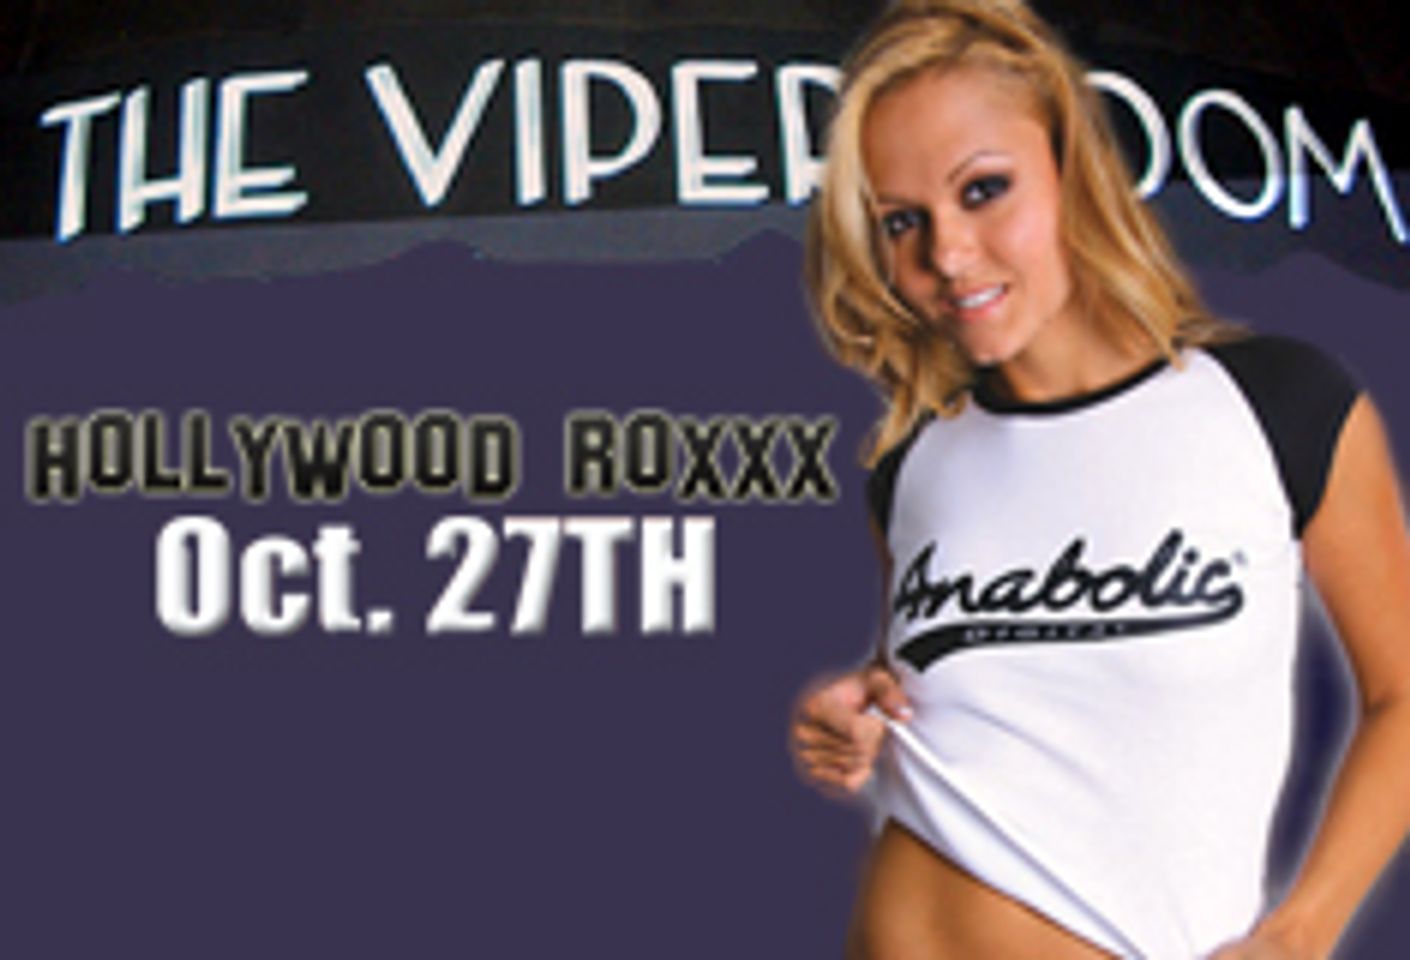 Anabolic Sponsors 'Hollywood Roxxx' Halloween Party Monday